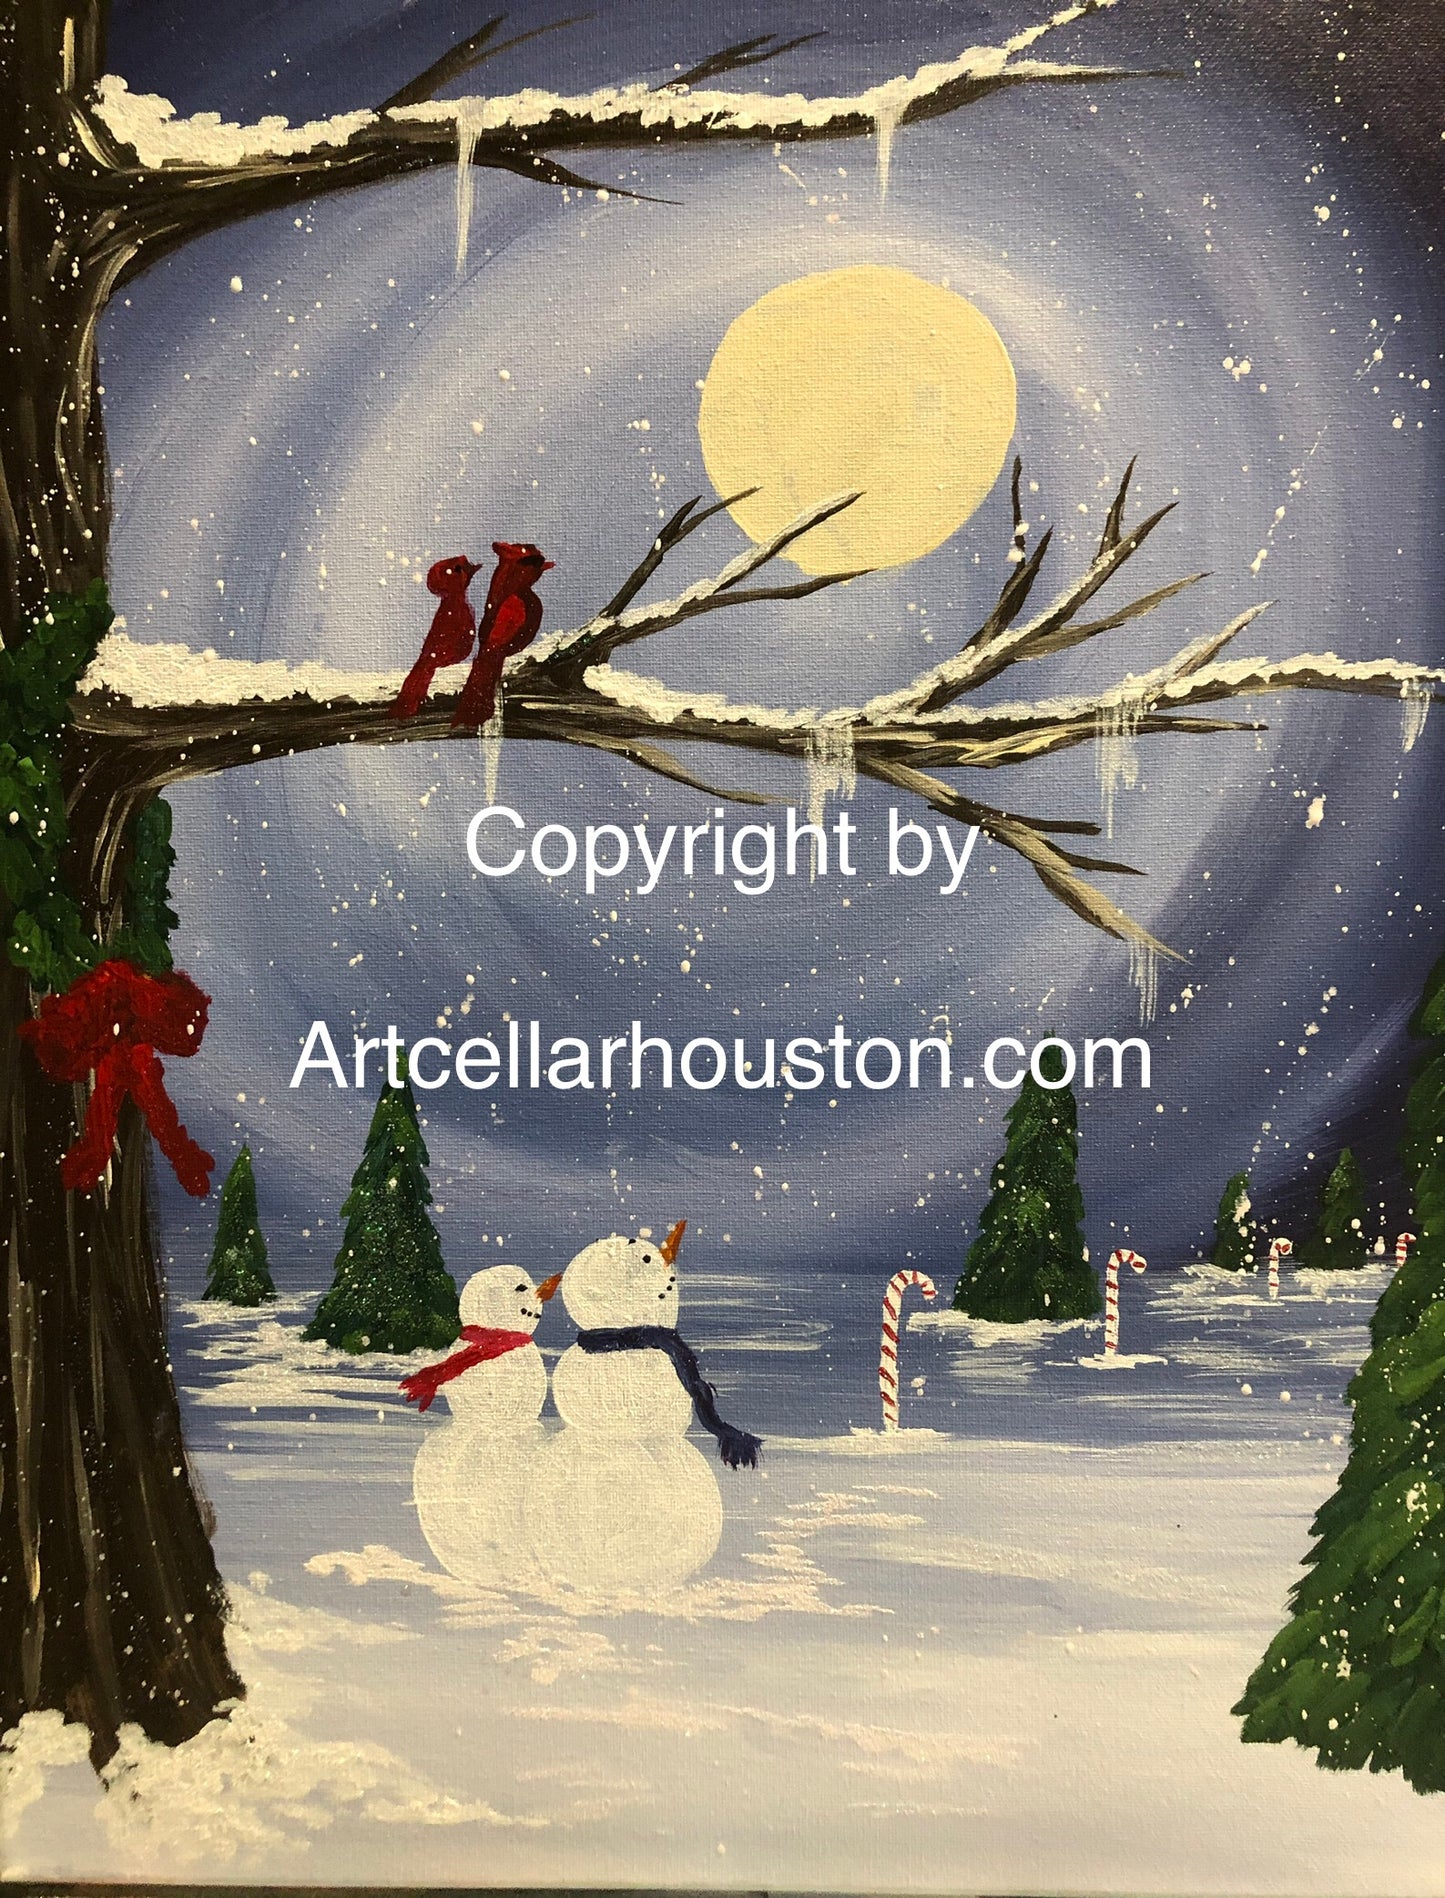 Art Cellar Houston Prints & Cards